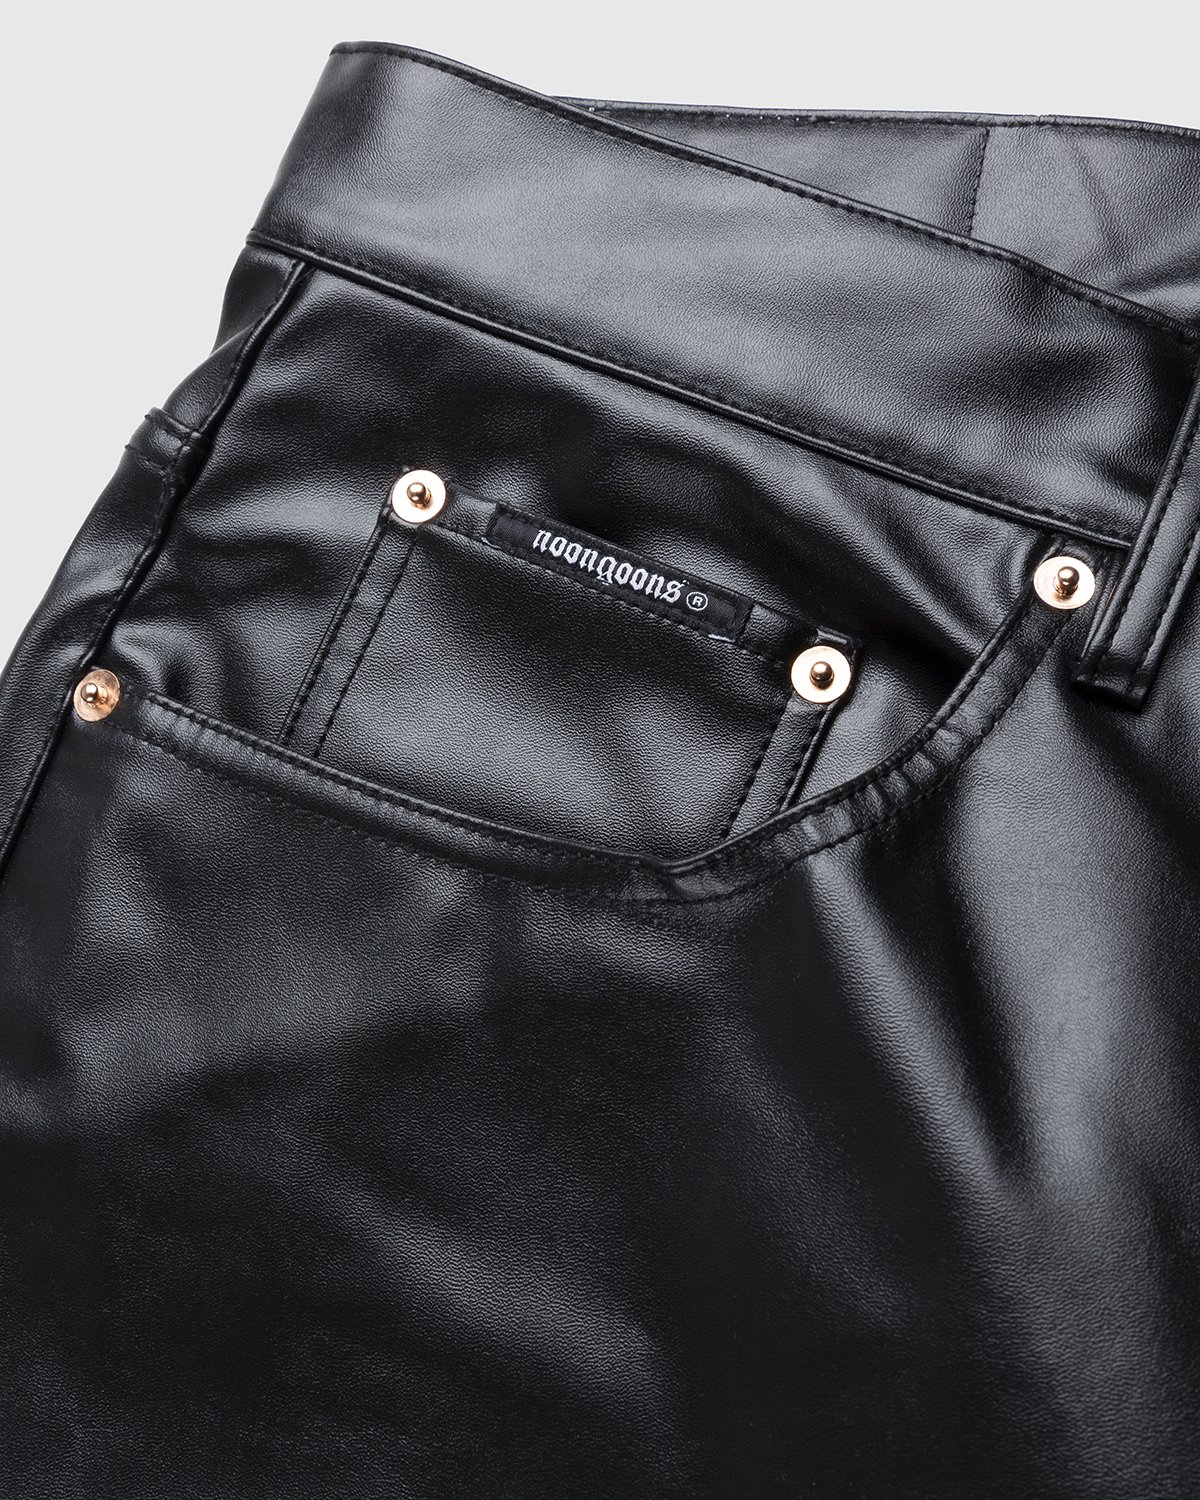 Noon Goons - Series Leather Pant Black - Clothing - Black - Image 6